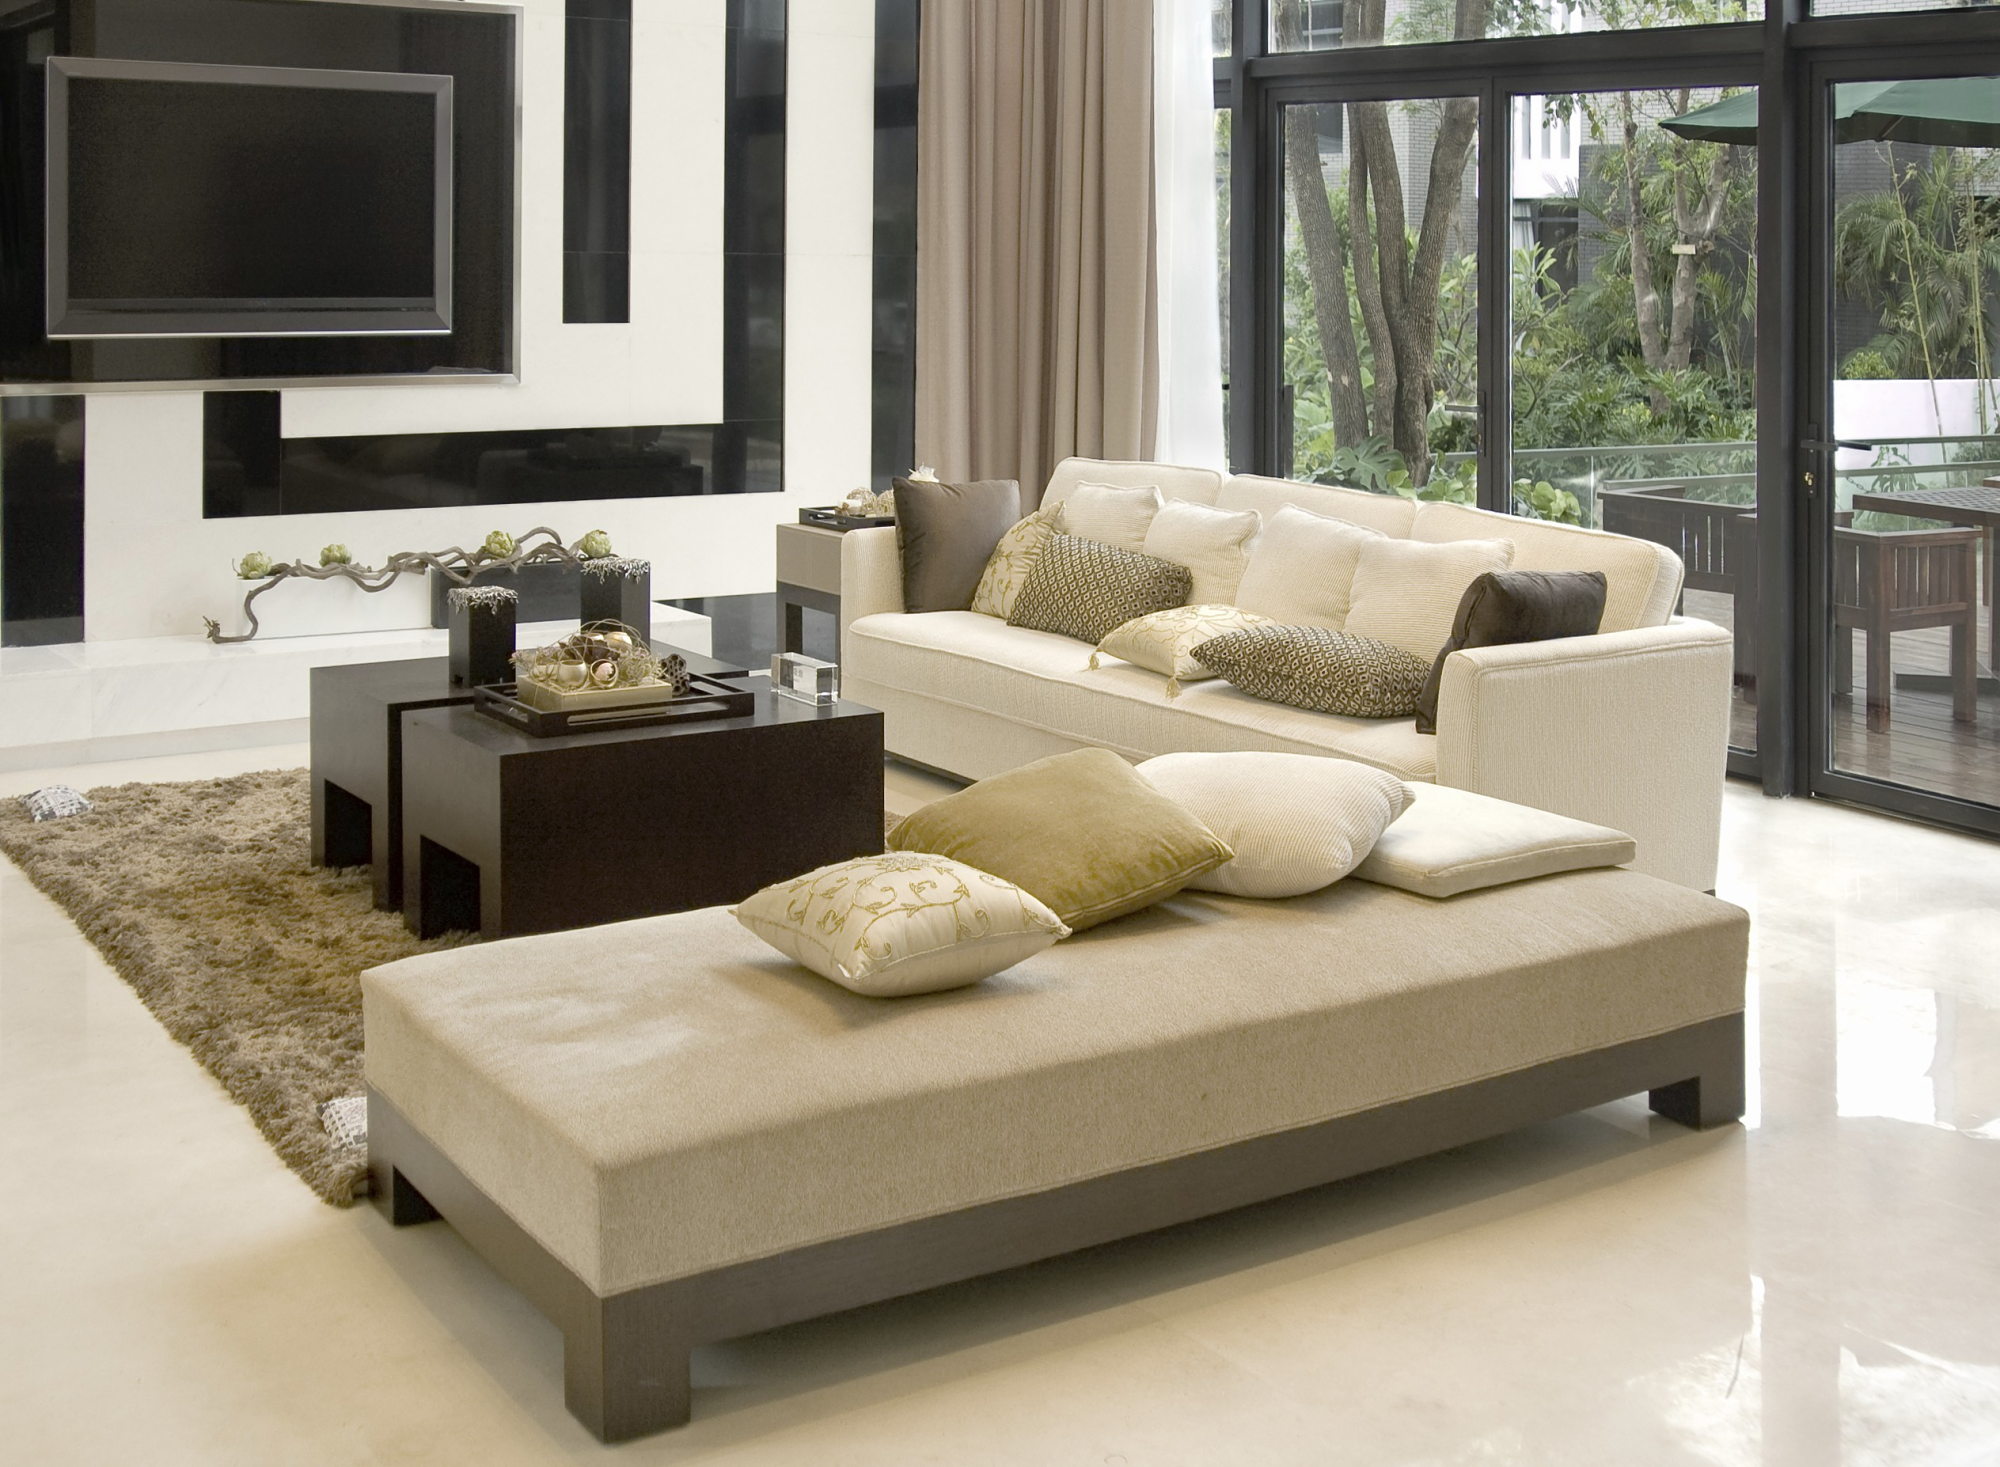 White grey and beige living room interior.jpg